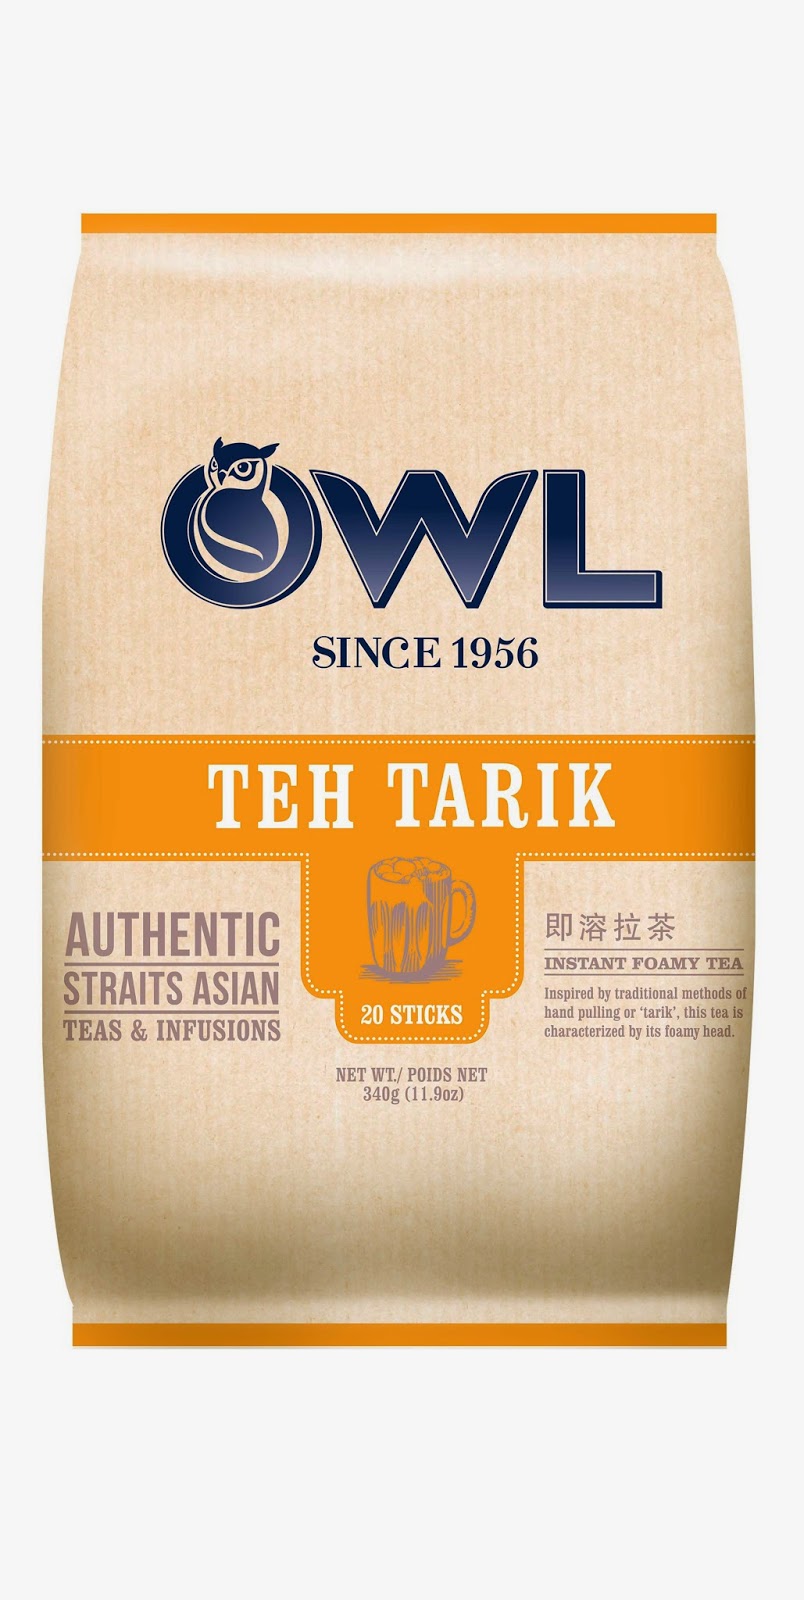 Owl Teh Tarik, by LivingMarjorney